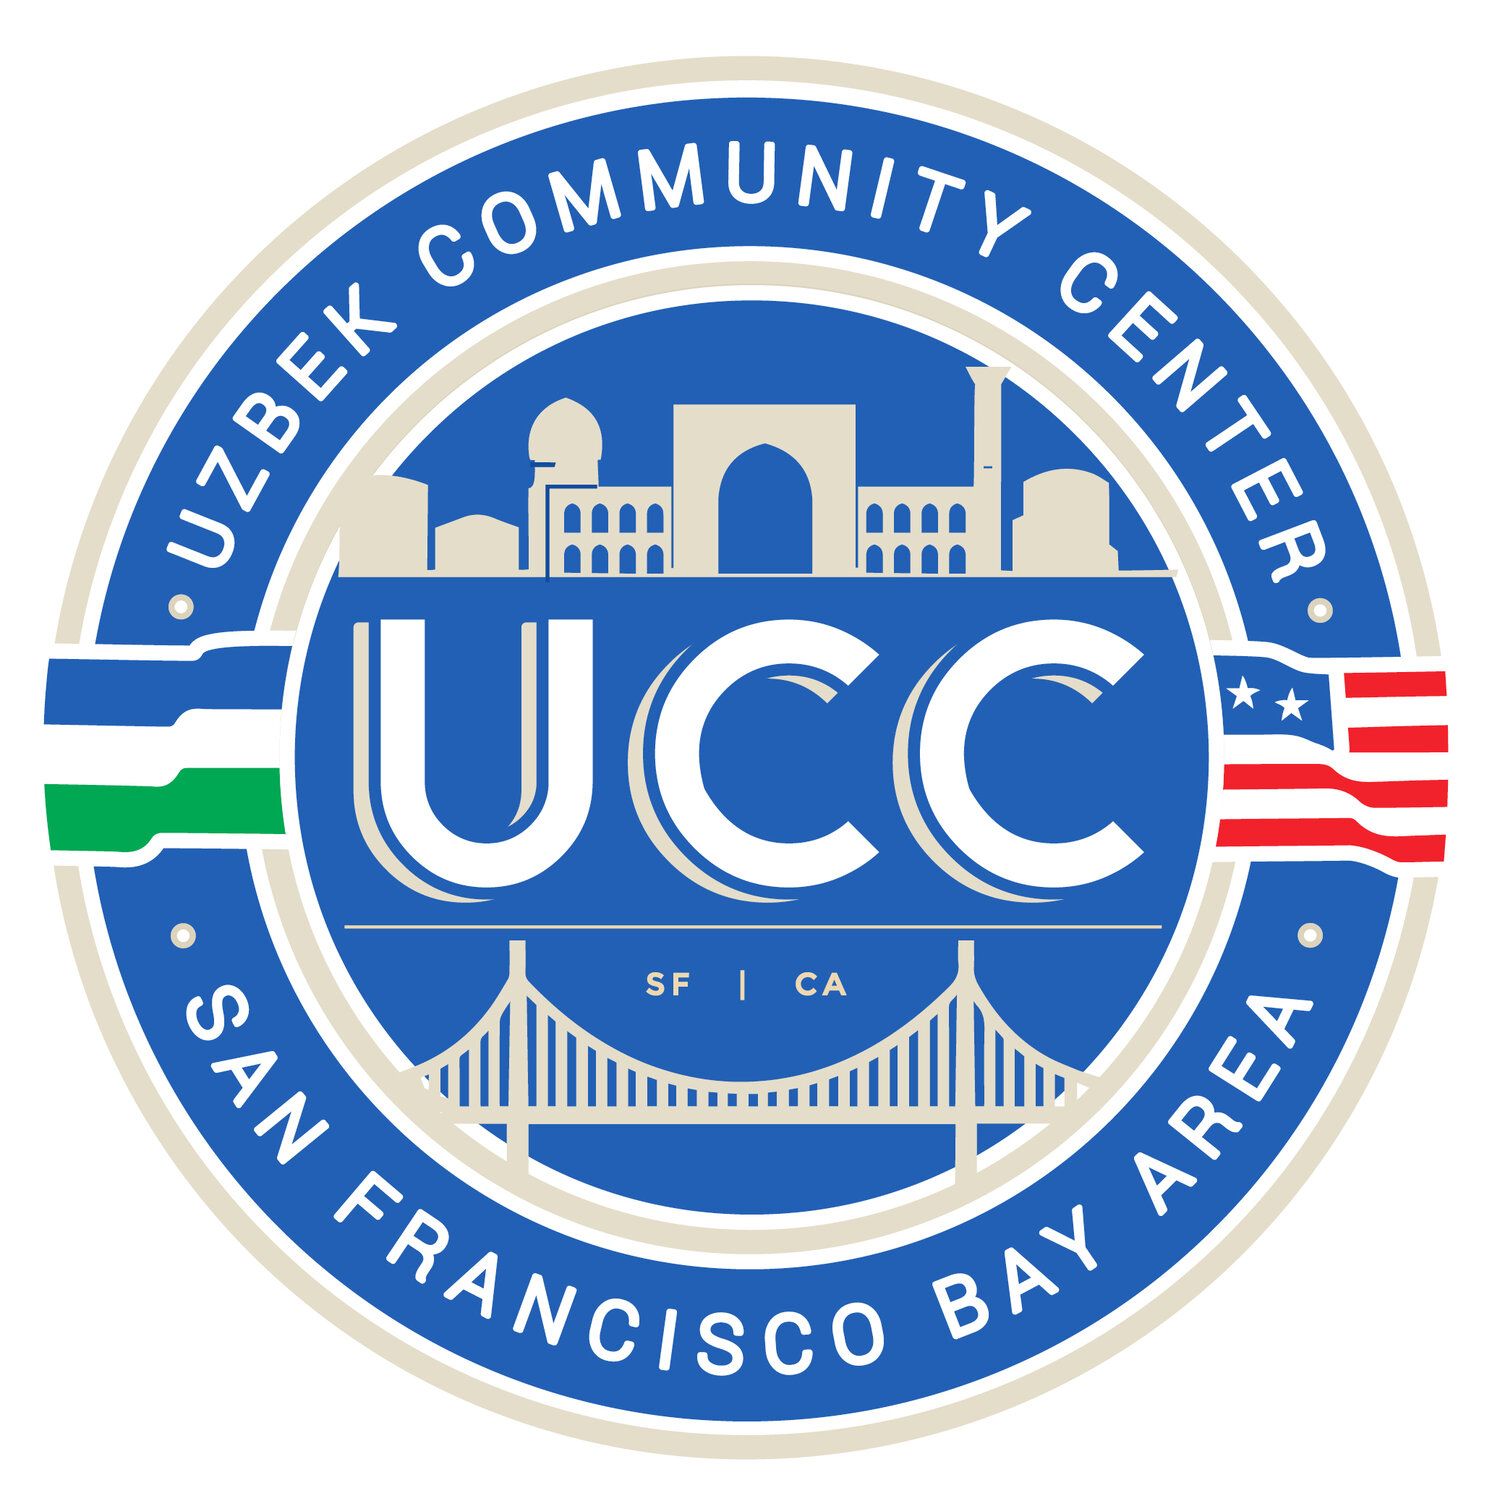 Uzbek Cultural Organization in Los Angeles California - Uzbek Community Center of San Francisco Bay Area